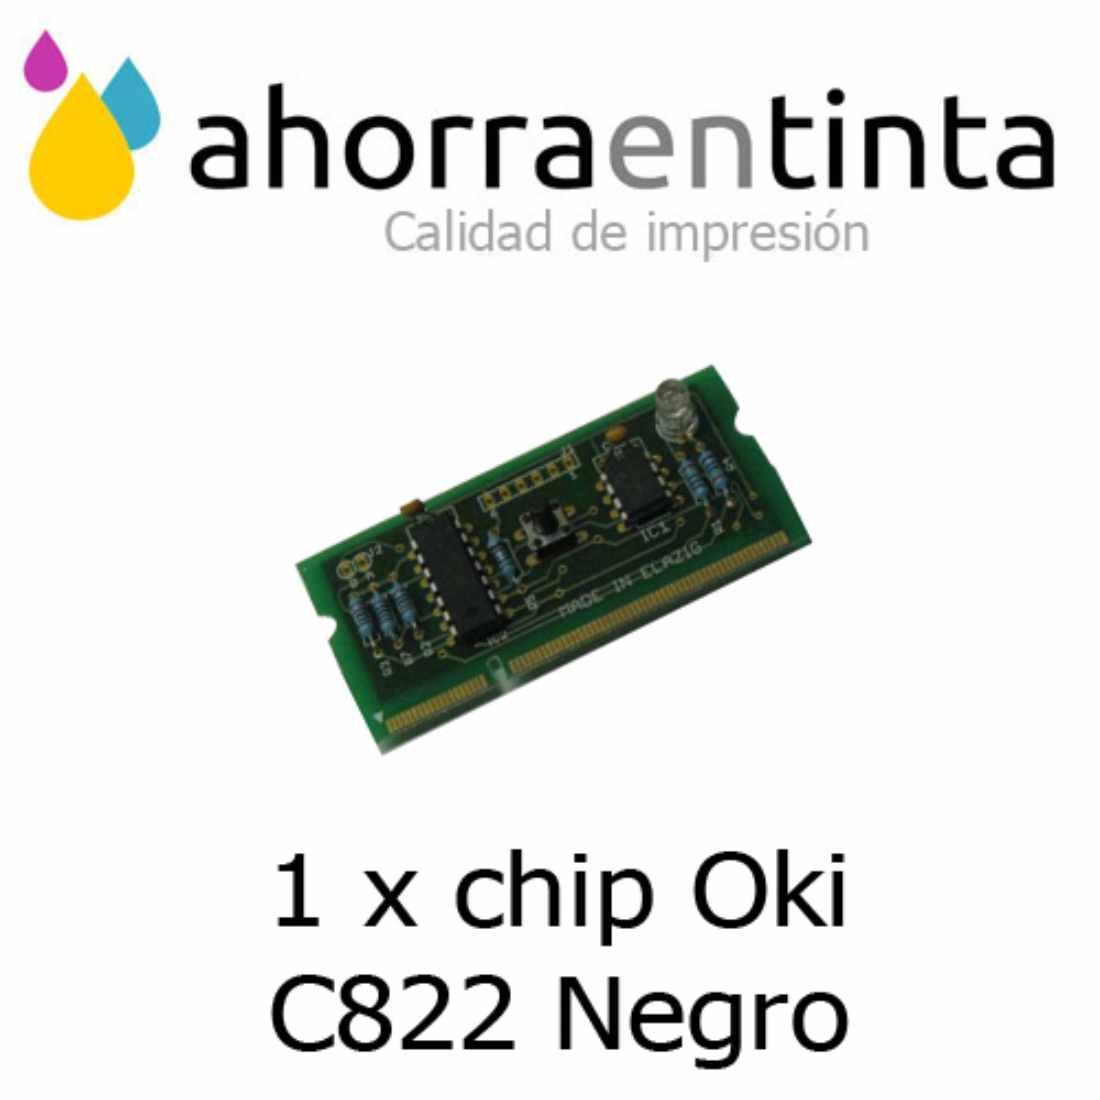 Foto de producto 1 x chip Oki C822 Negro